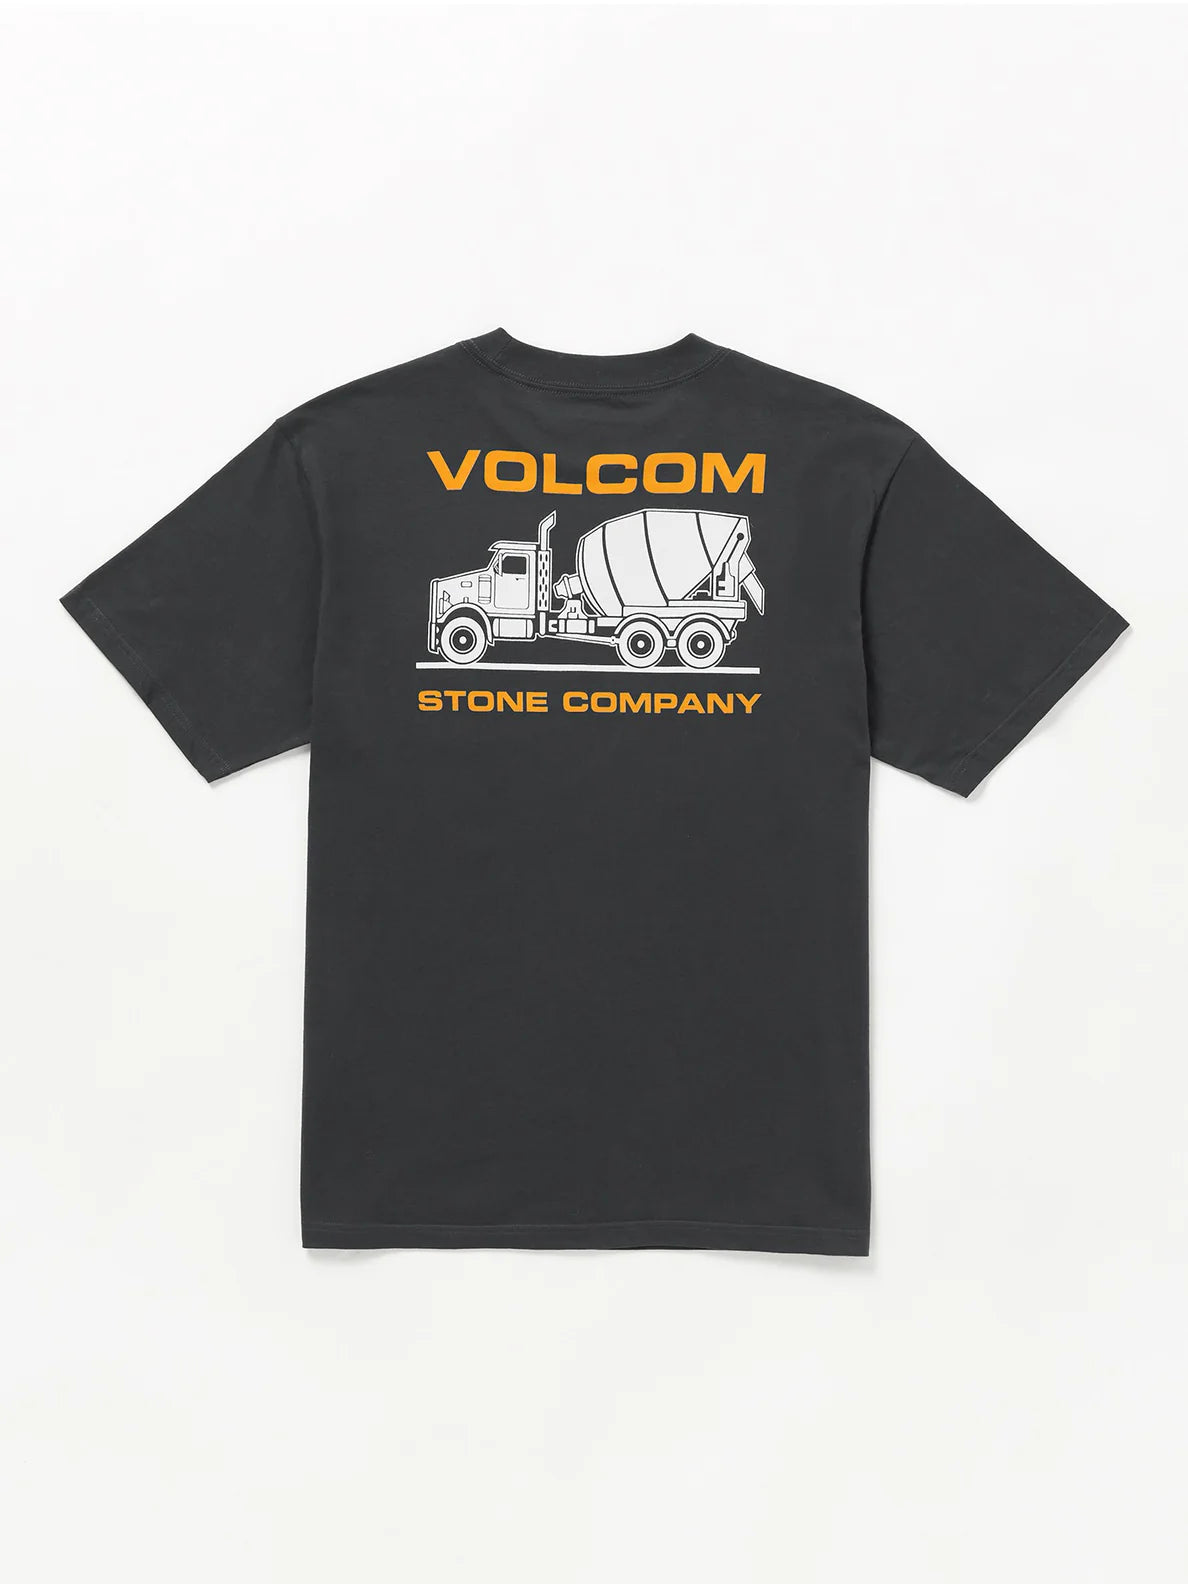 VOLCOM Skate Vitals Grant Taylor T-Shirt Stealth Men's Short Sleeve T-Shirts Volcom 